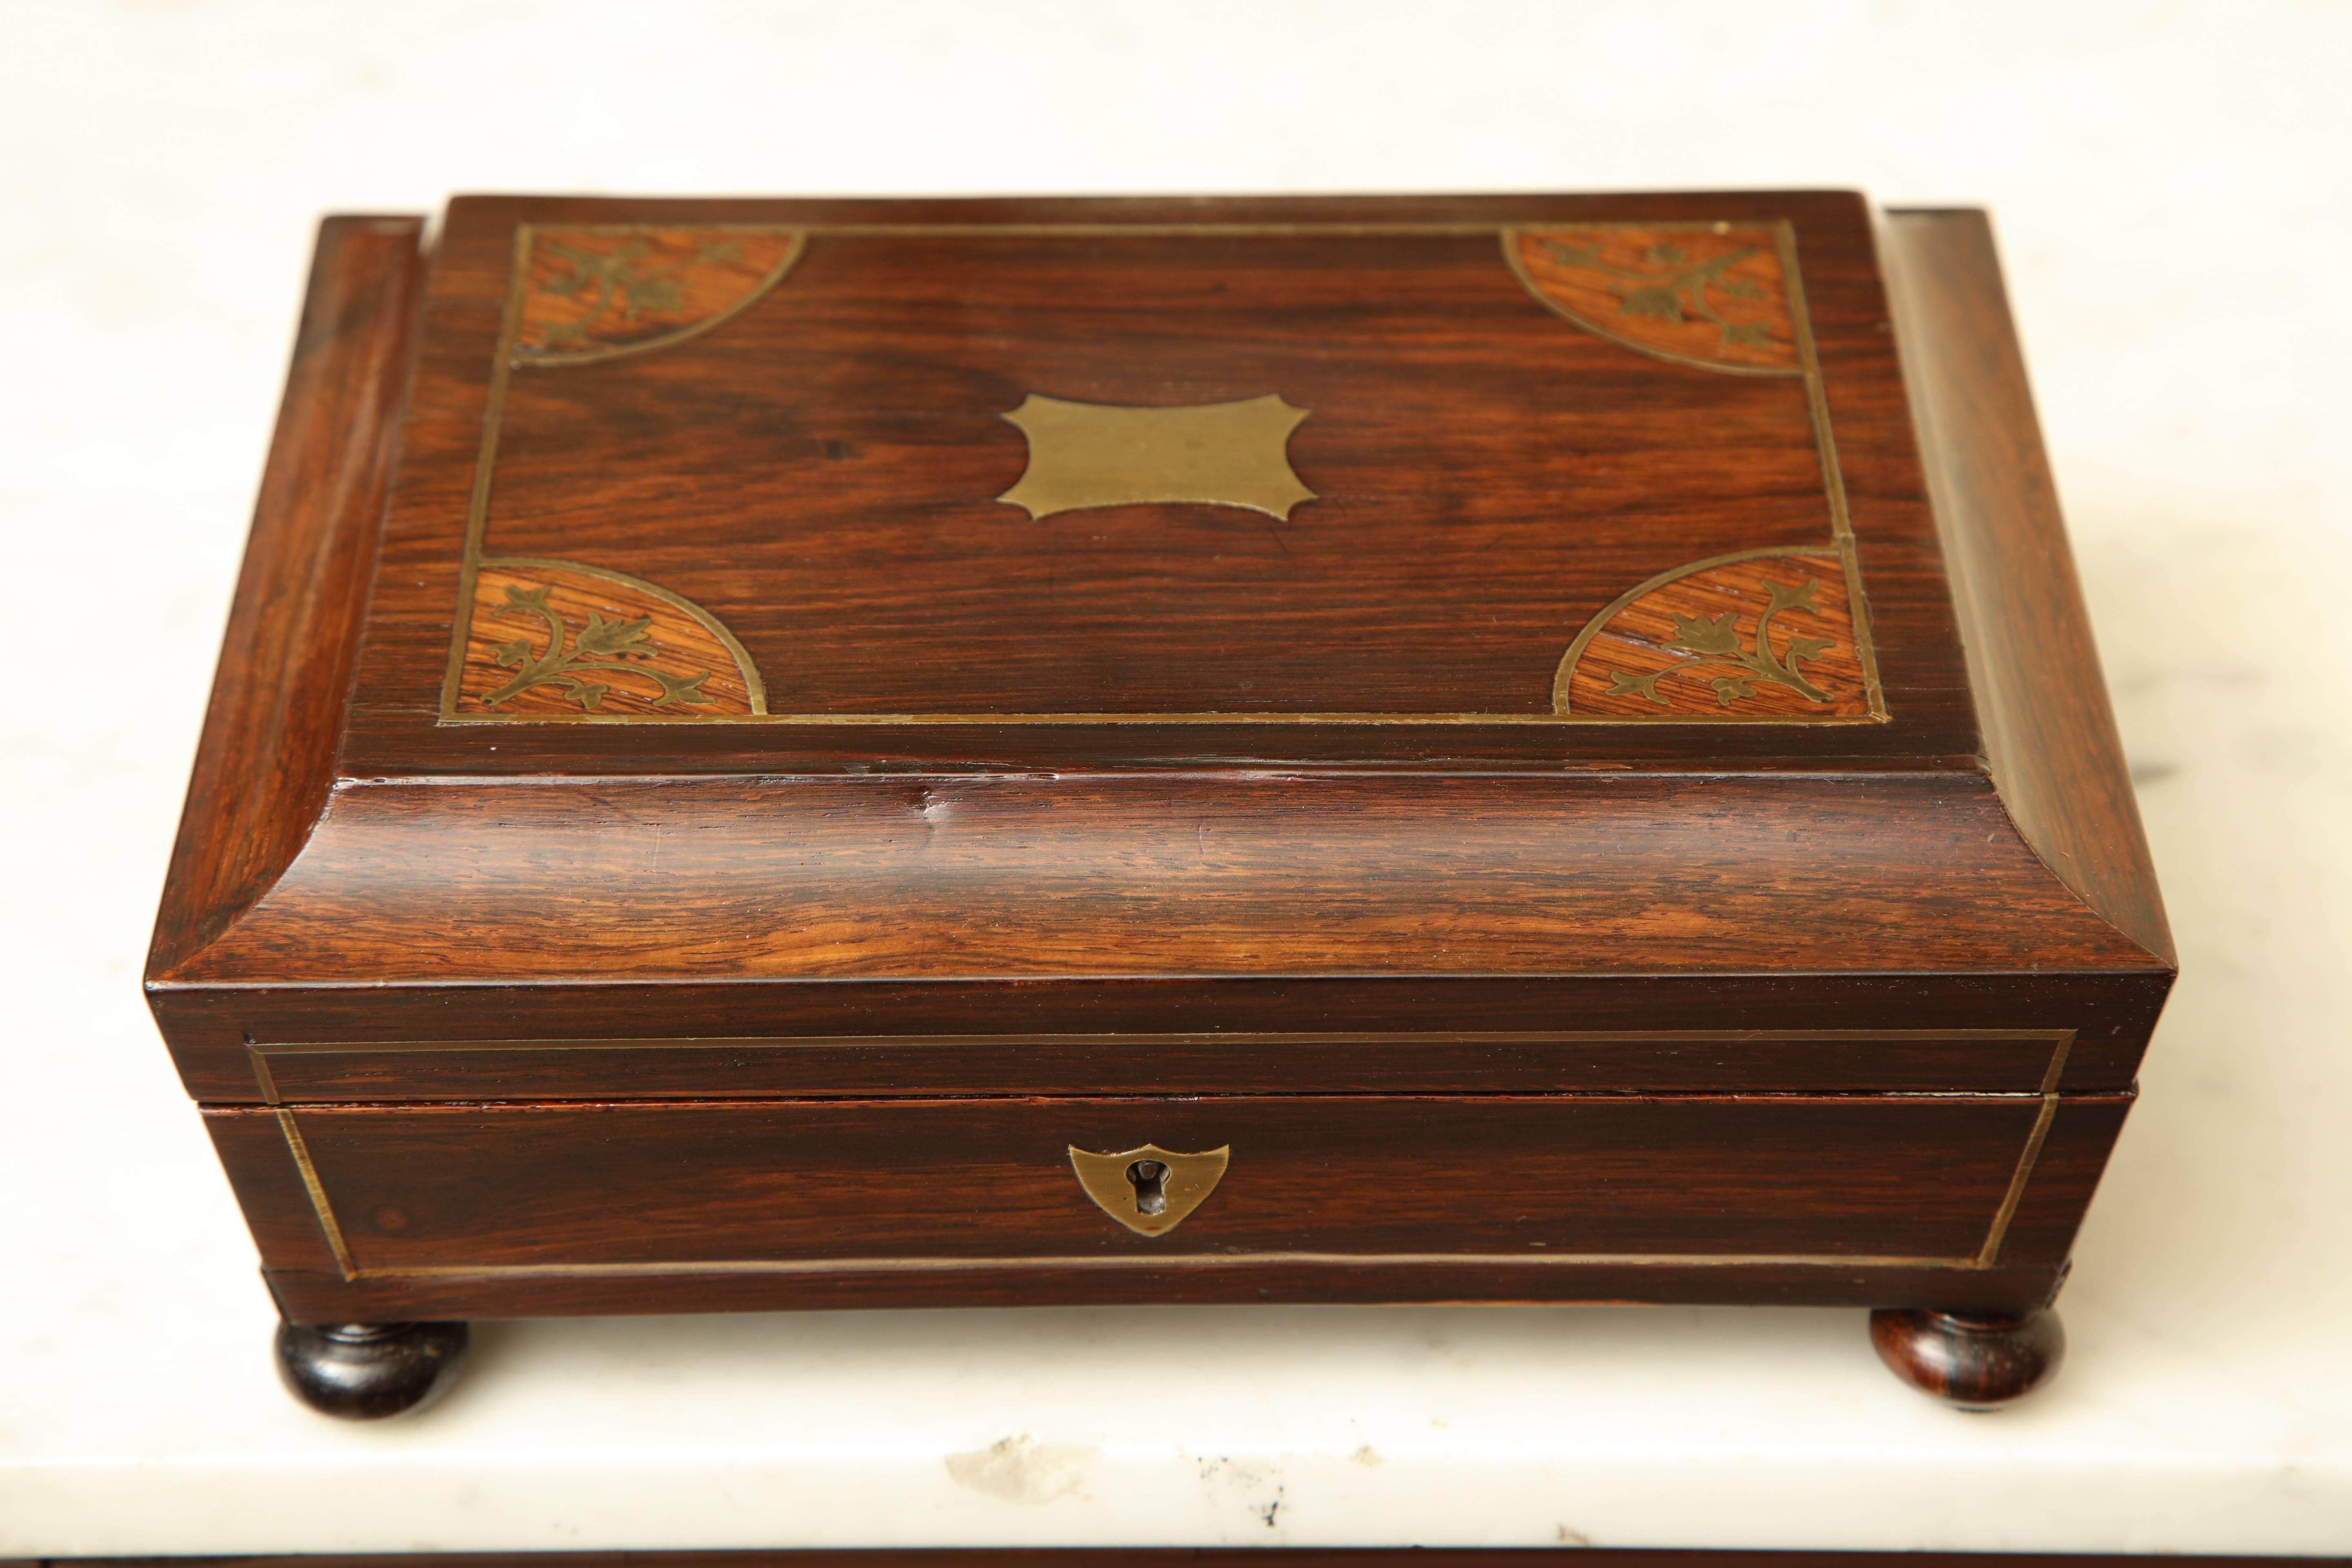 Early 19th century English Regency, brass inlaid box.